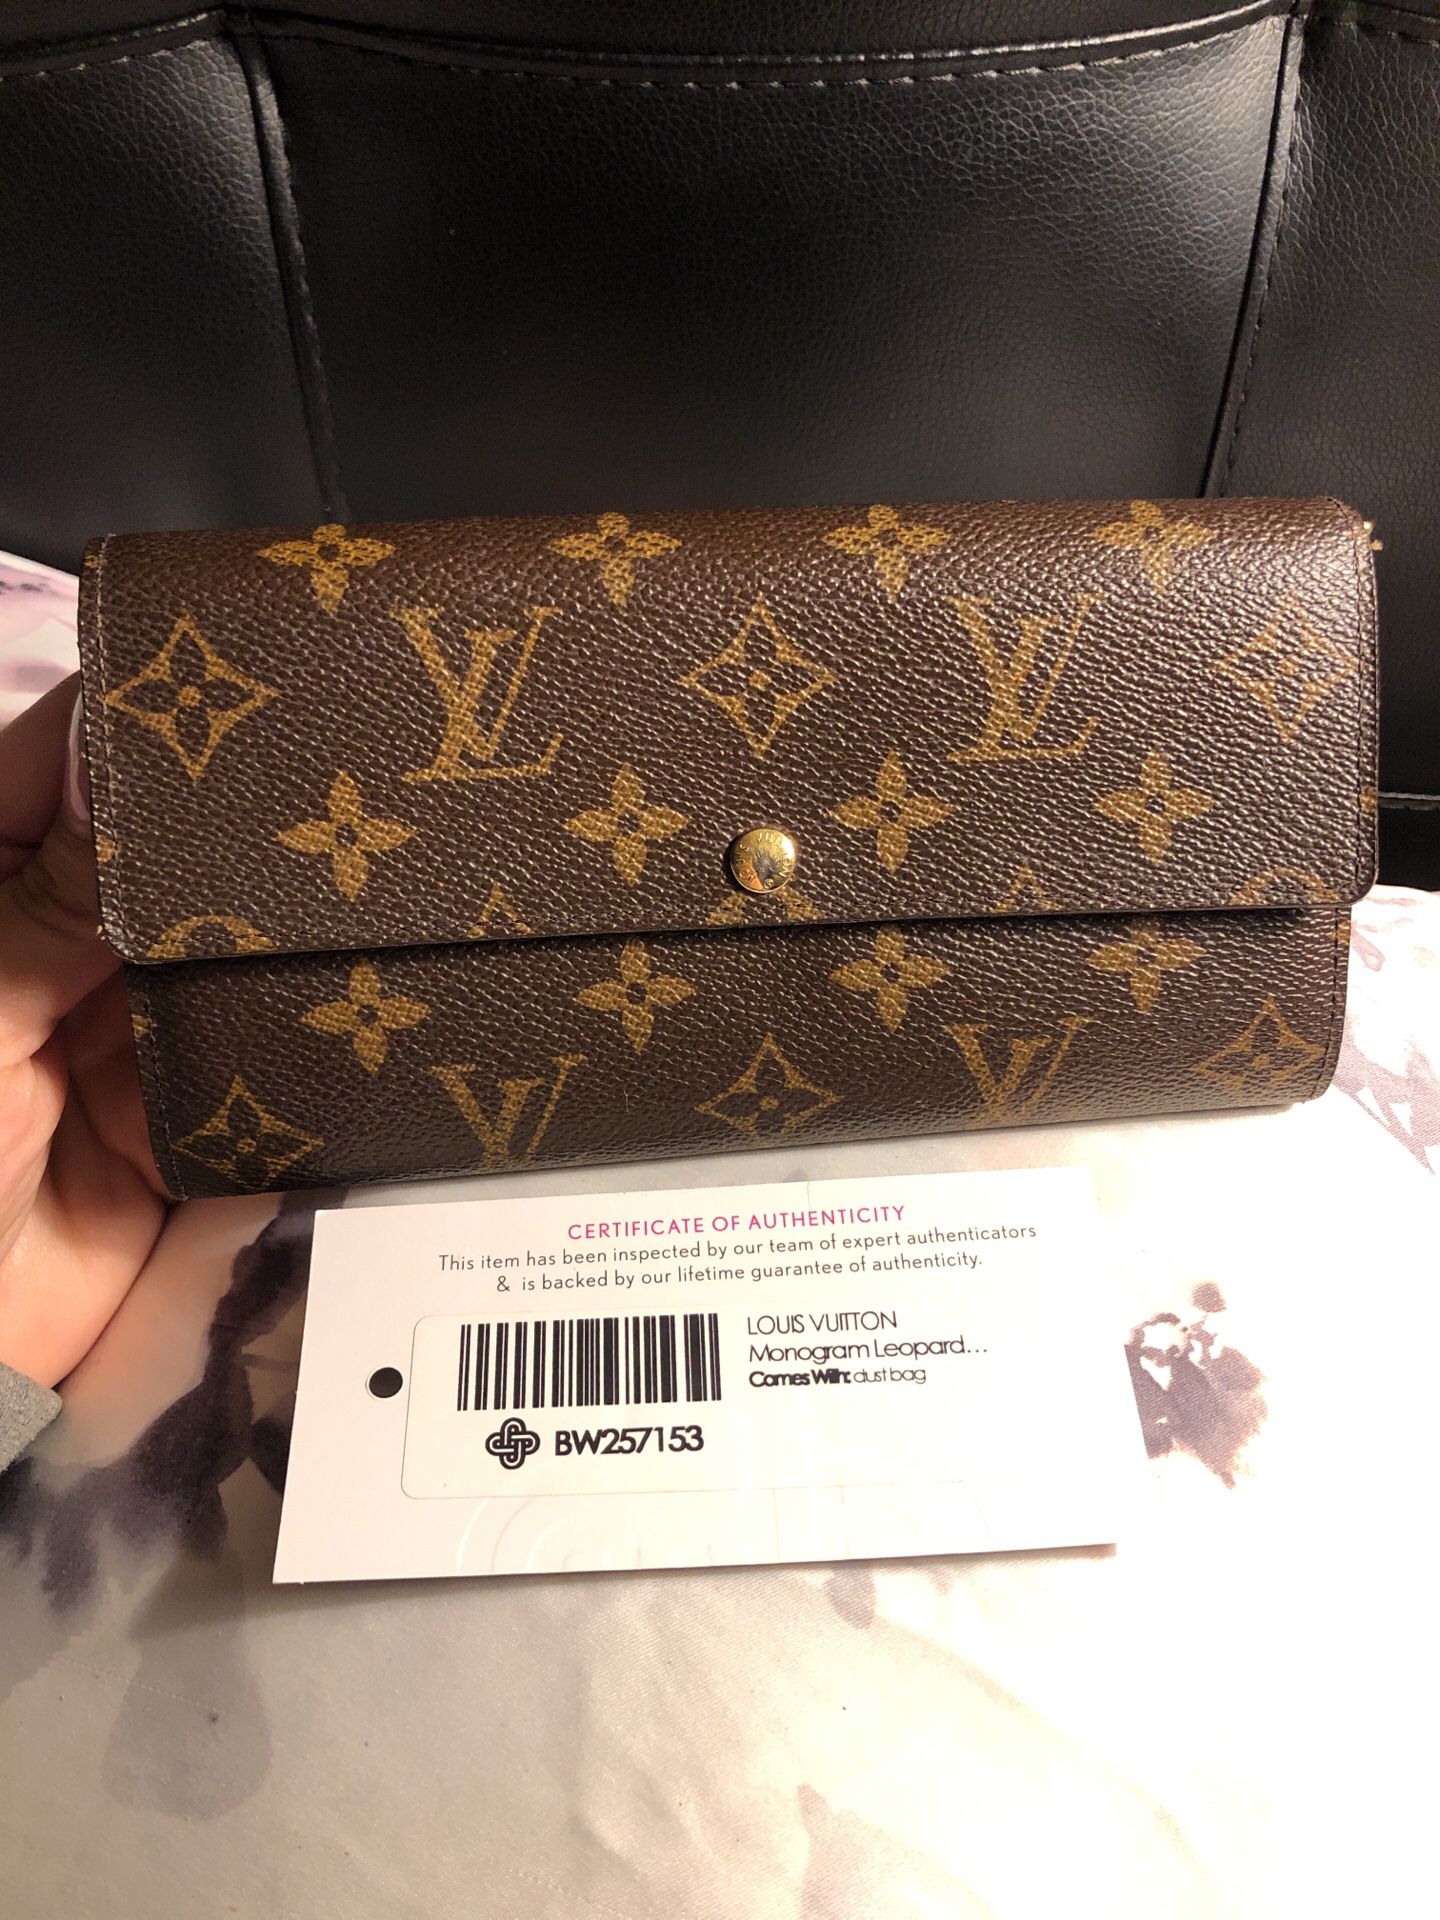 Louis Vuitton Large Monogram Wallet Crossbody Tan - $250 (75% Off Retail) -  From Karla